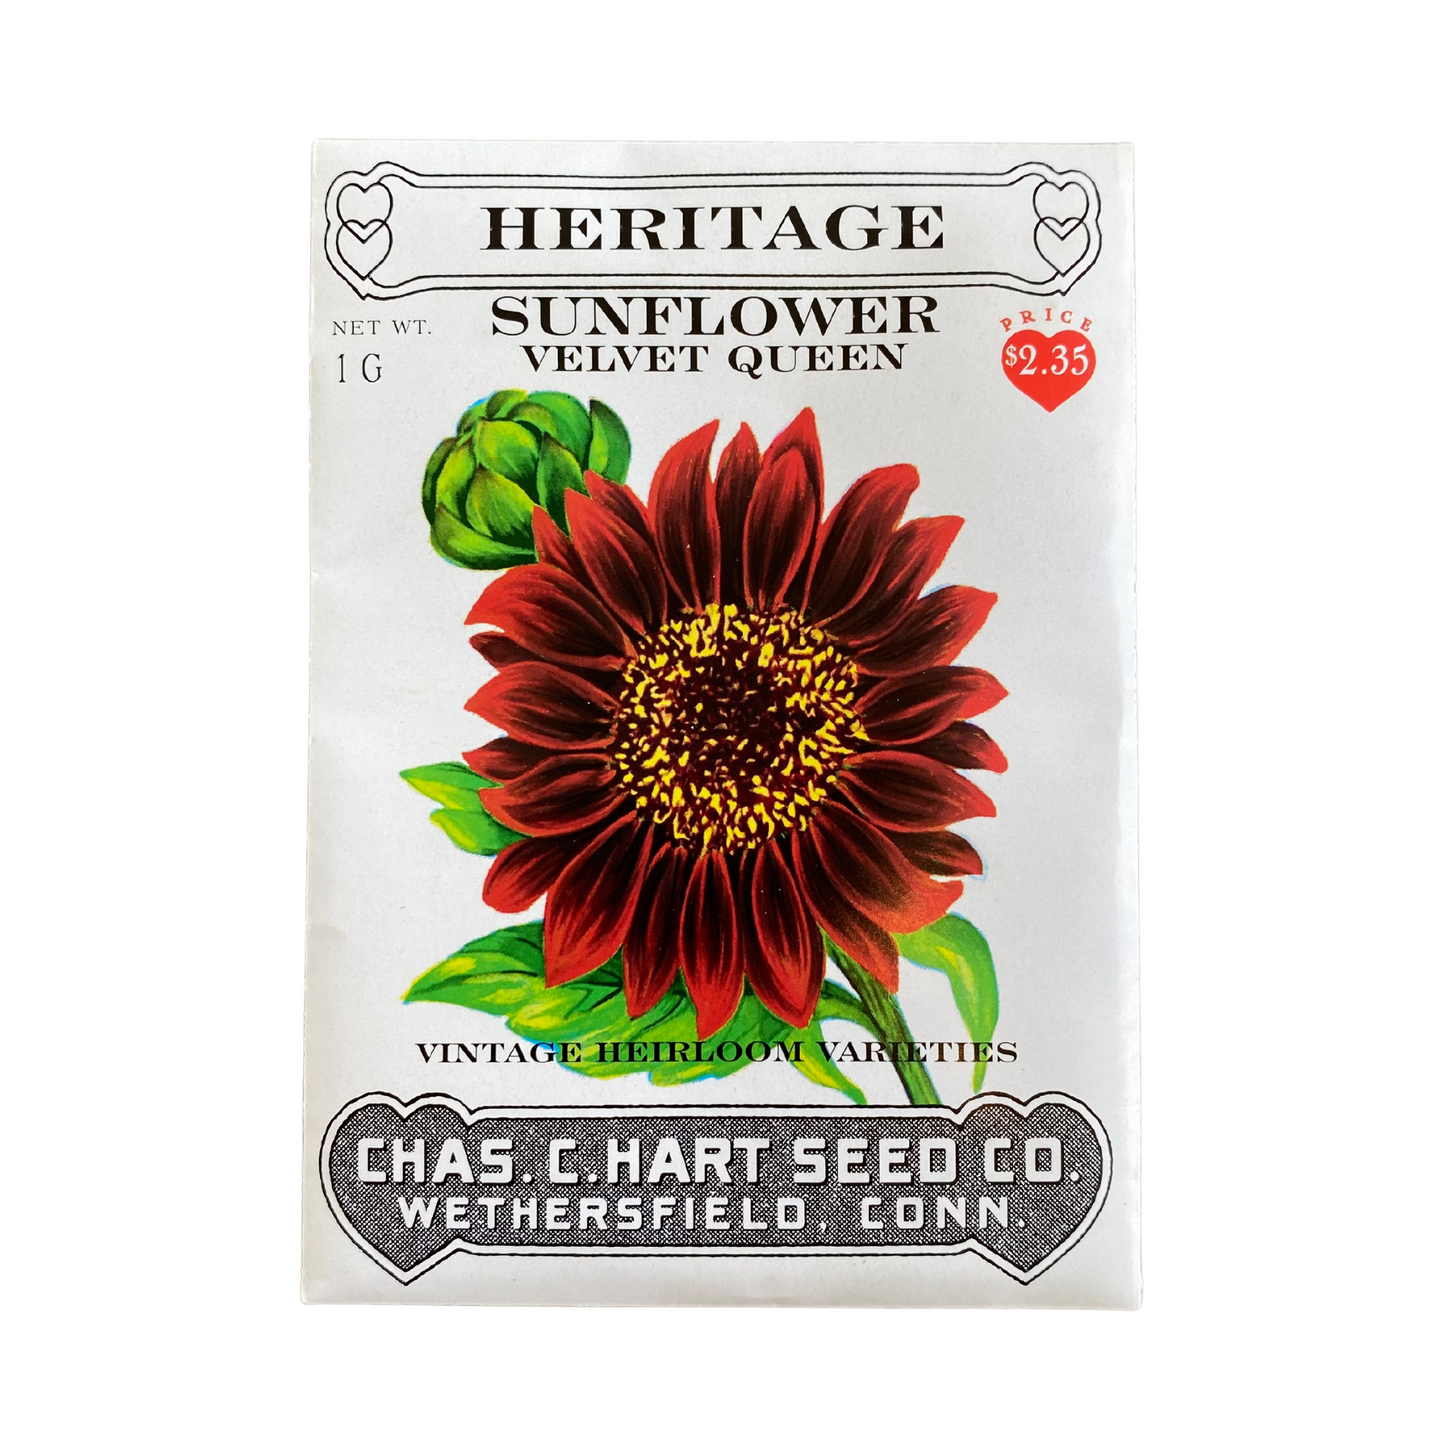 Heritage Sunflower Velvet Queen